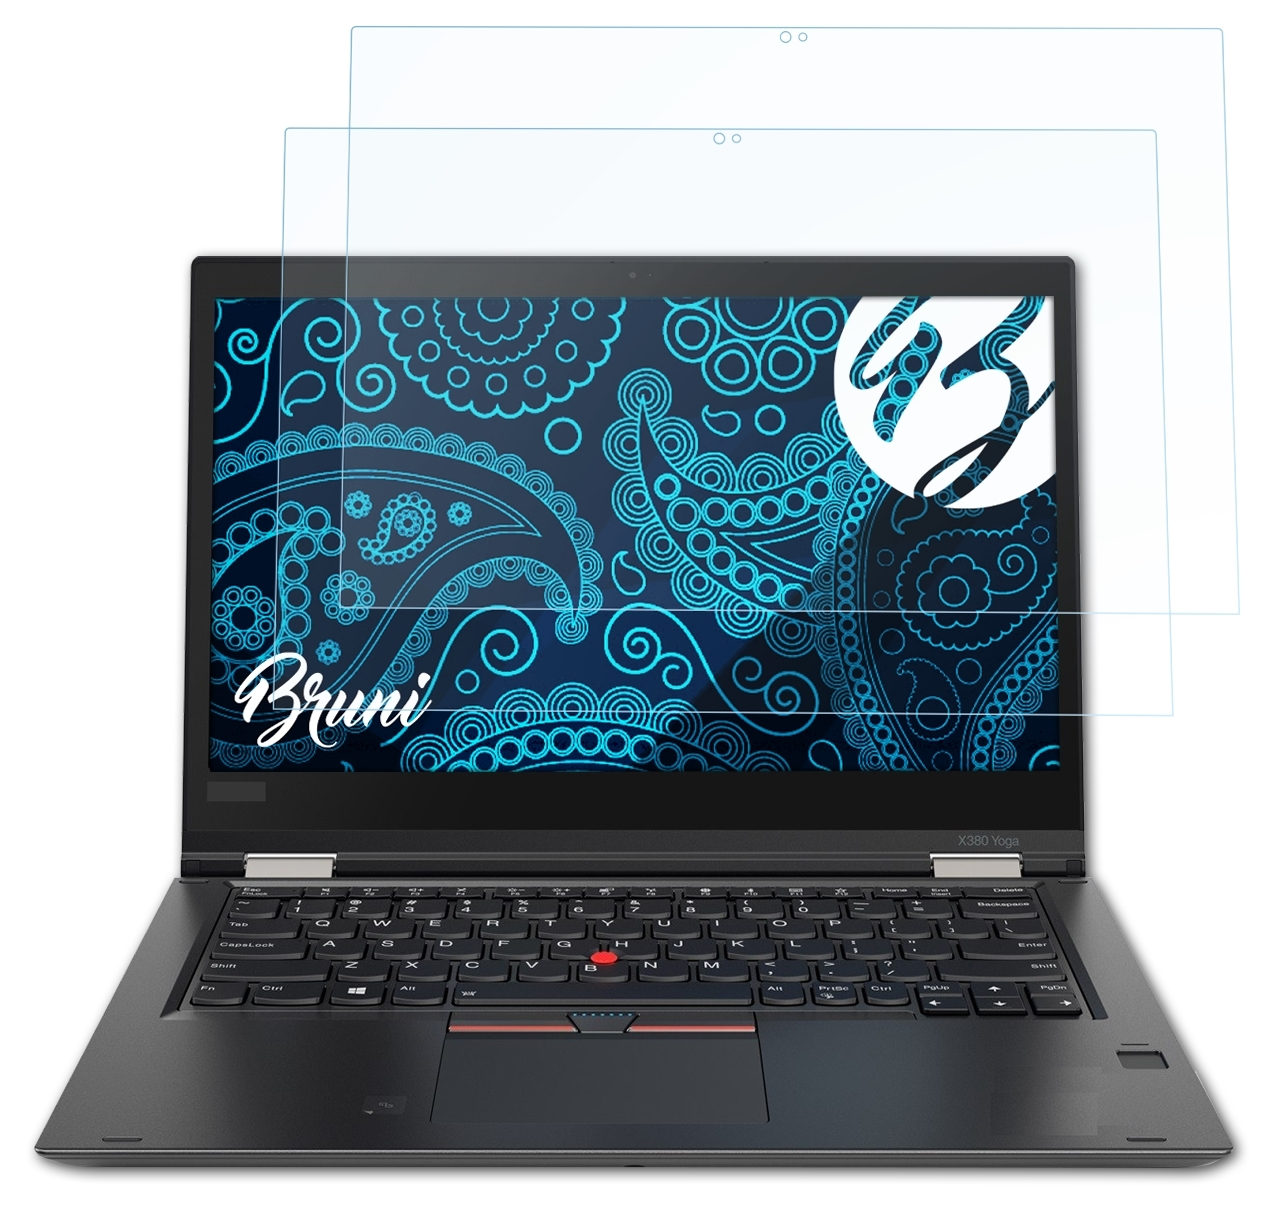 2x BRUNI Lenovo Basics-Clear Schutzfolie(für Yoga) ThinkPad X380